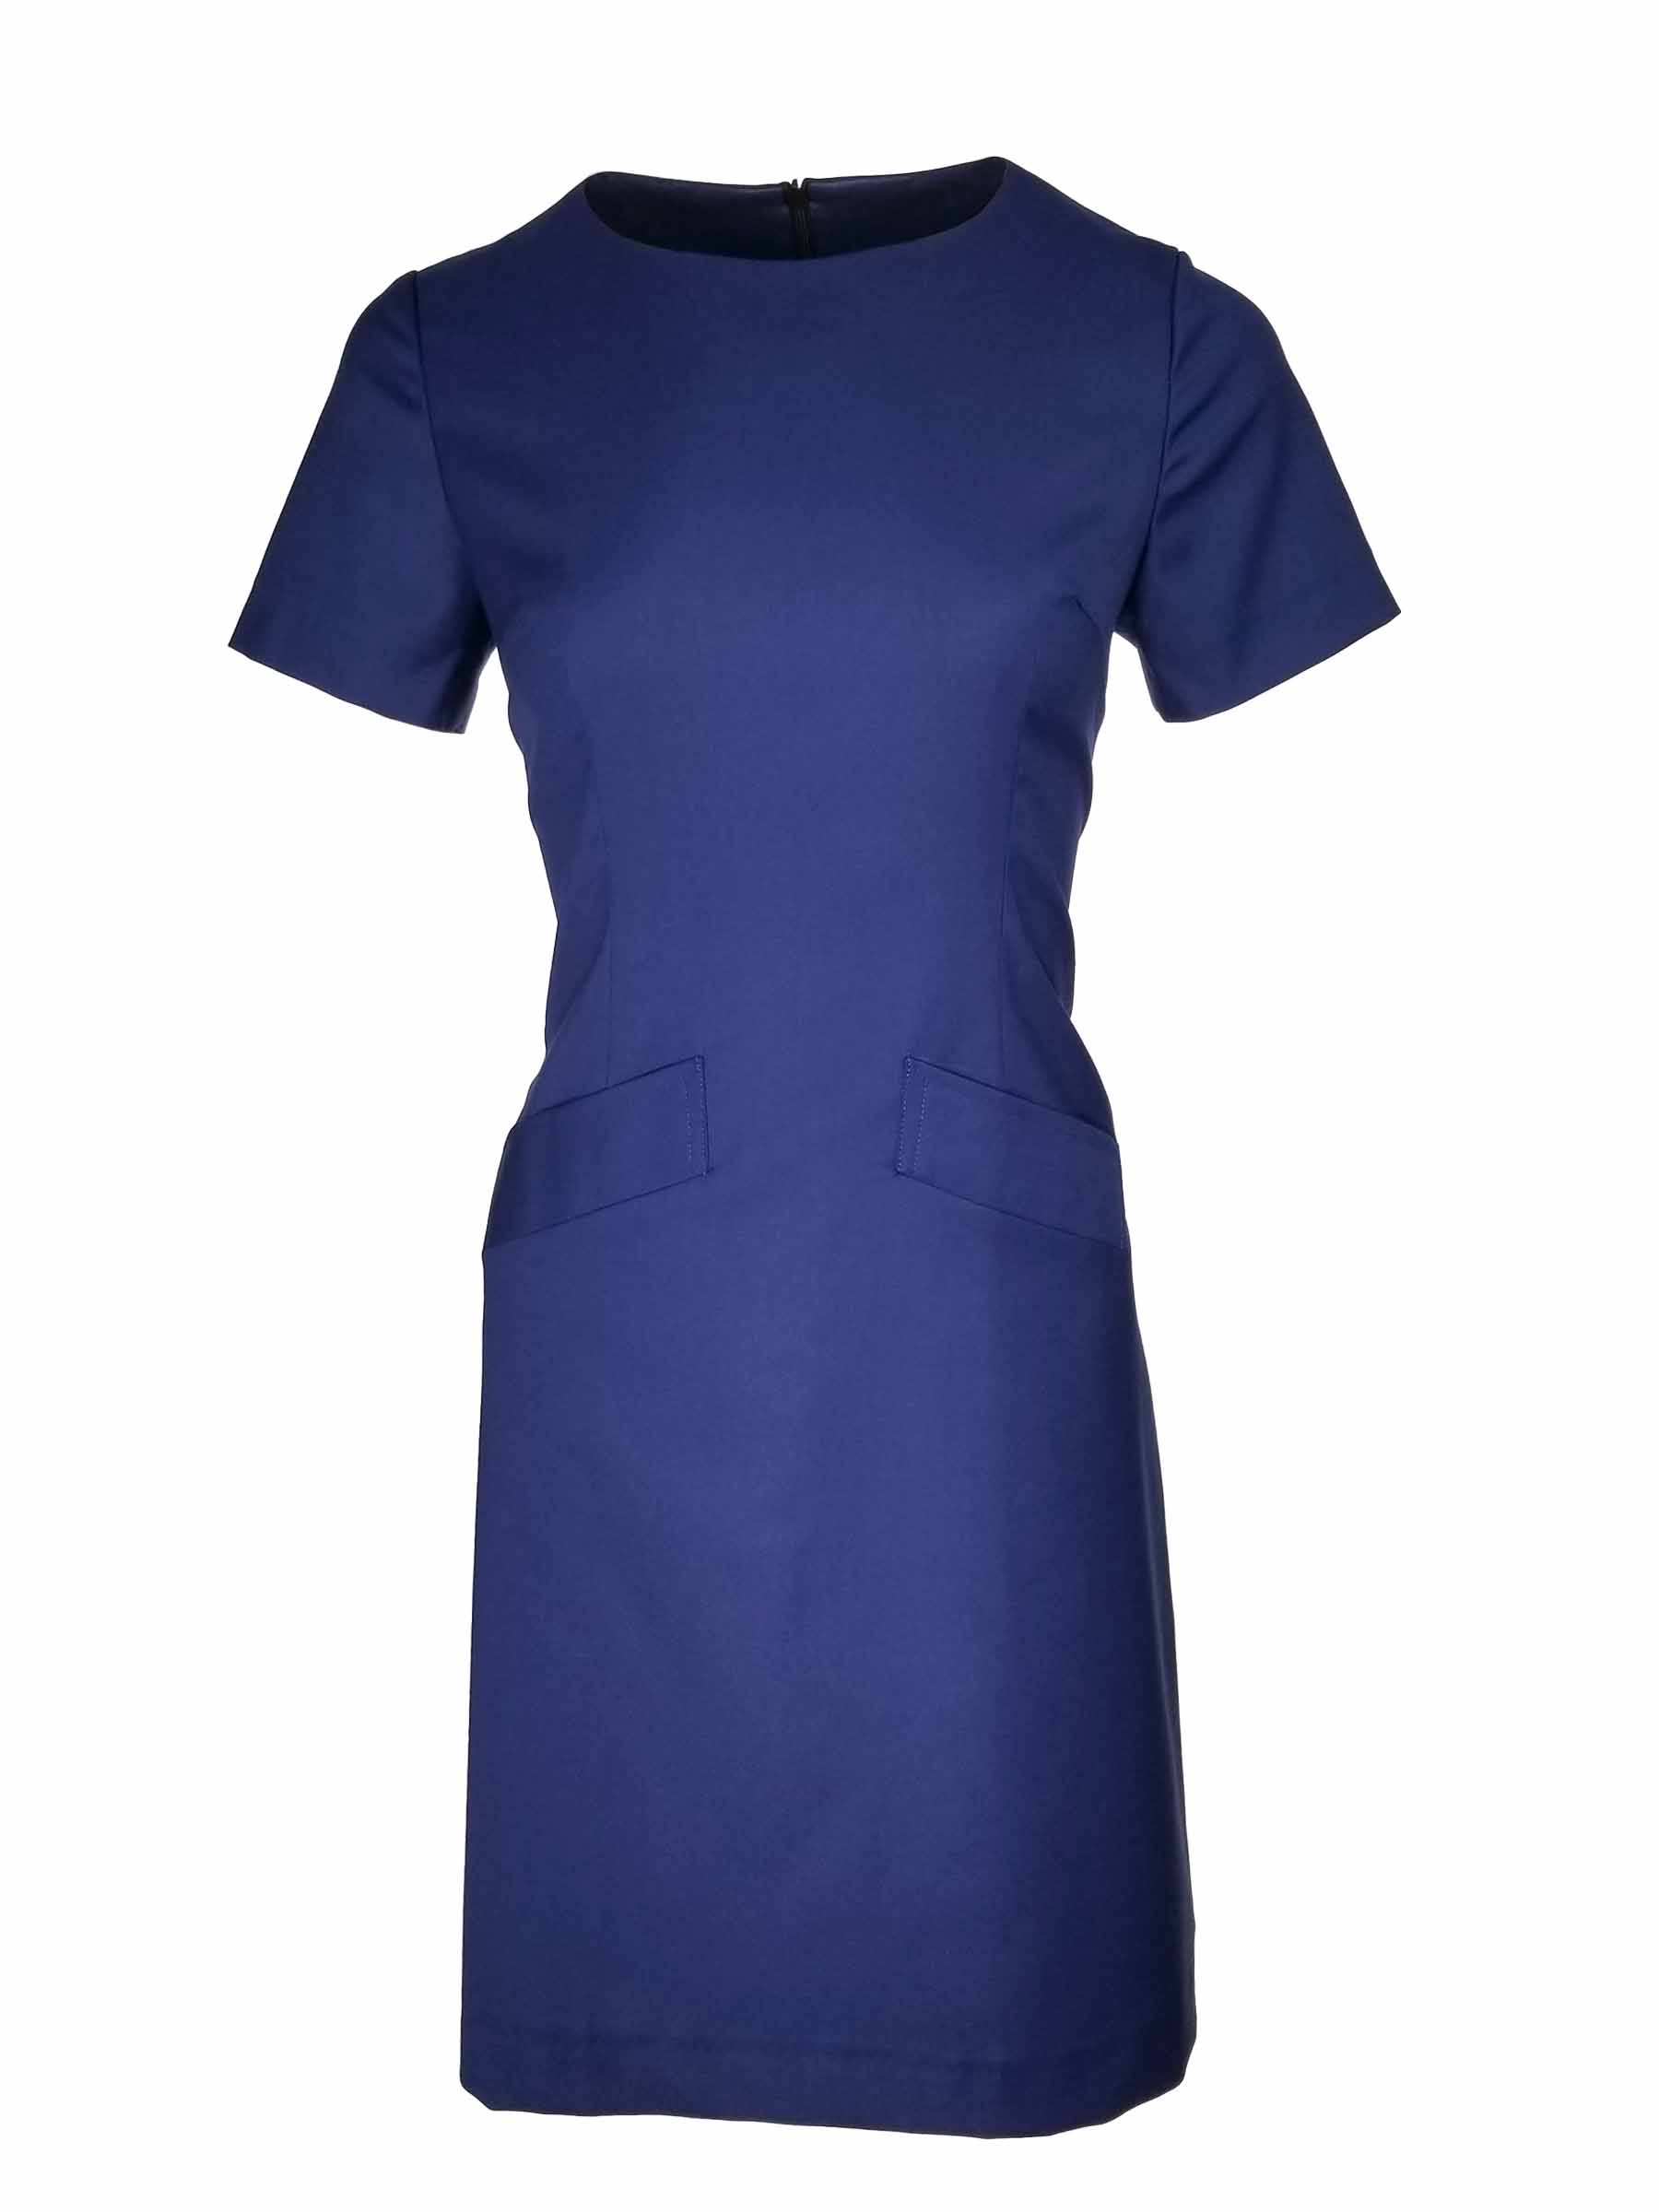 Giorga Short Sleeve A-Line Dress - Royal - Uniform Edit